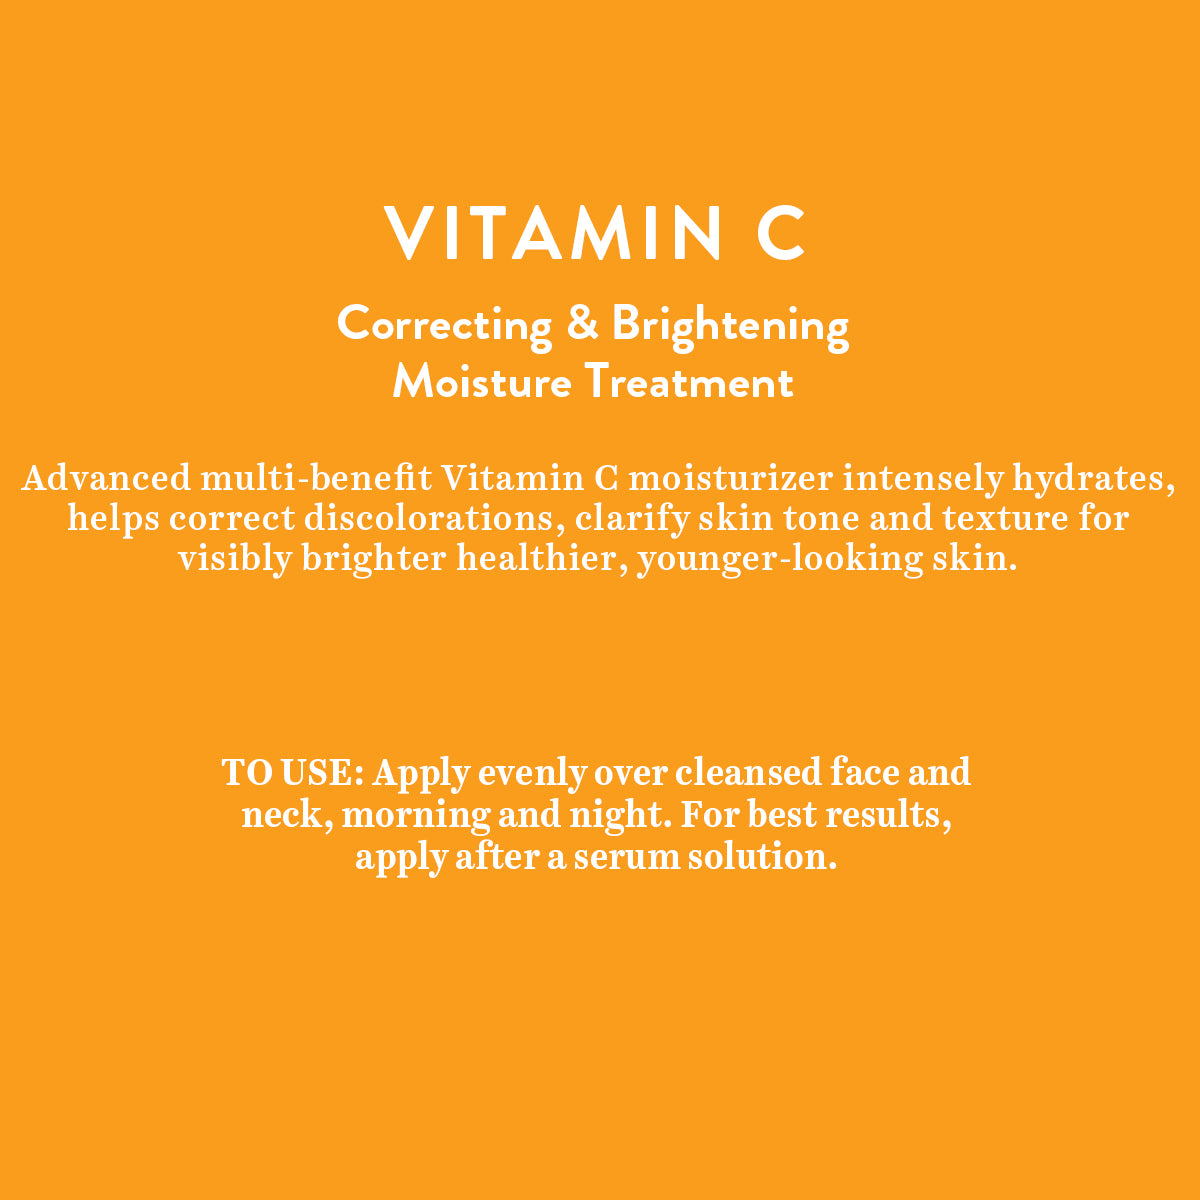 Vitamin C Correcting and Brightening Moisture Treatment 50g